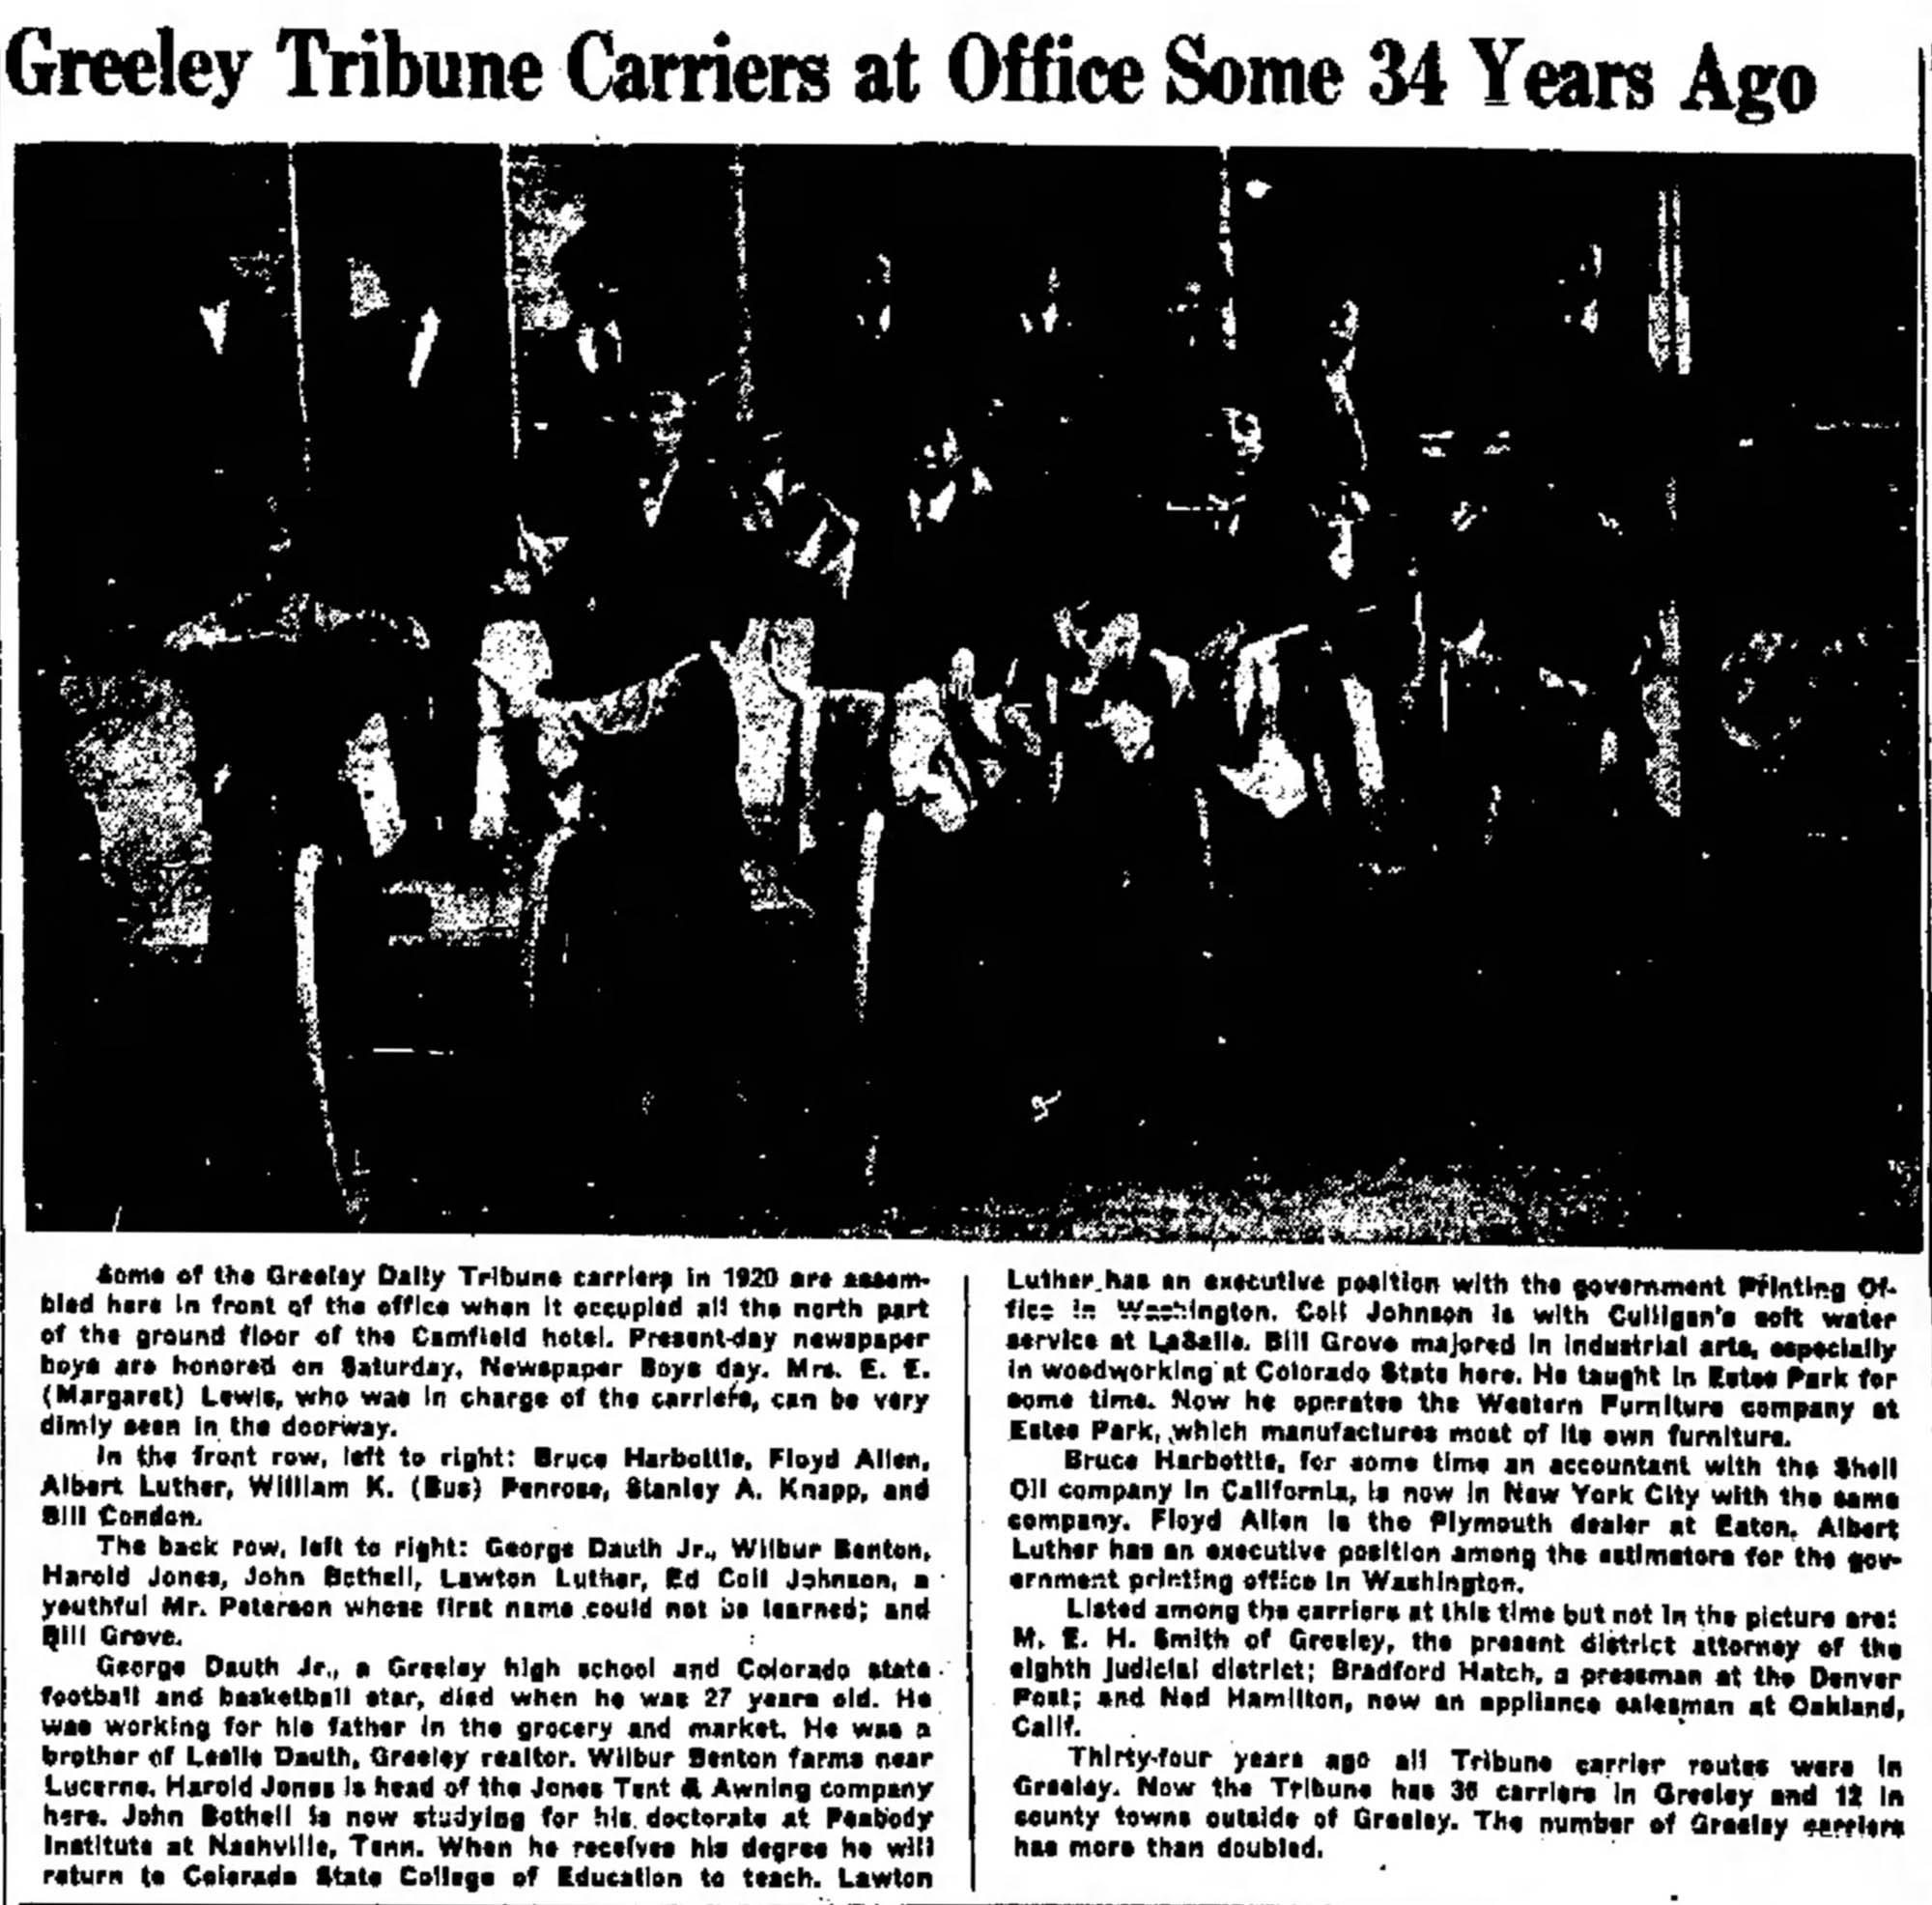 Dauth Family Archive - 1954-10-02 - Greeley Daily Tribune - June Dauth Newspaper Boy